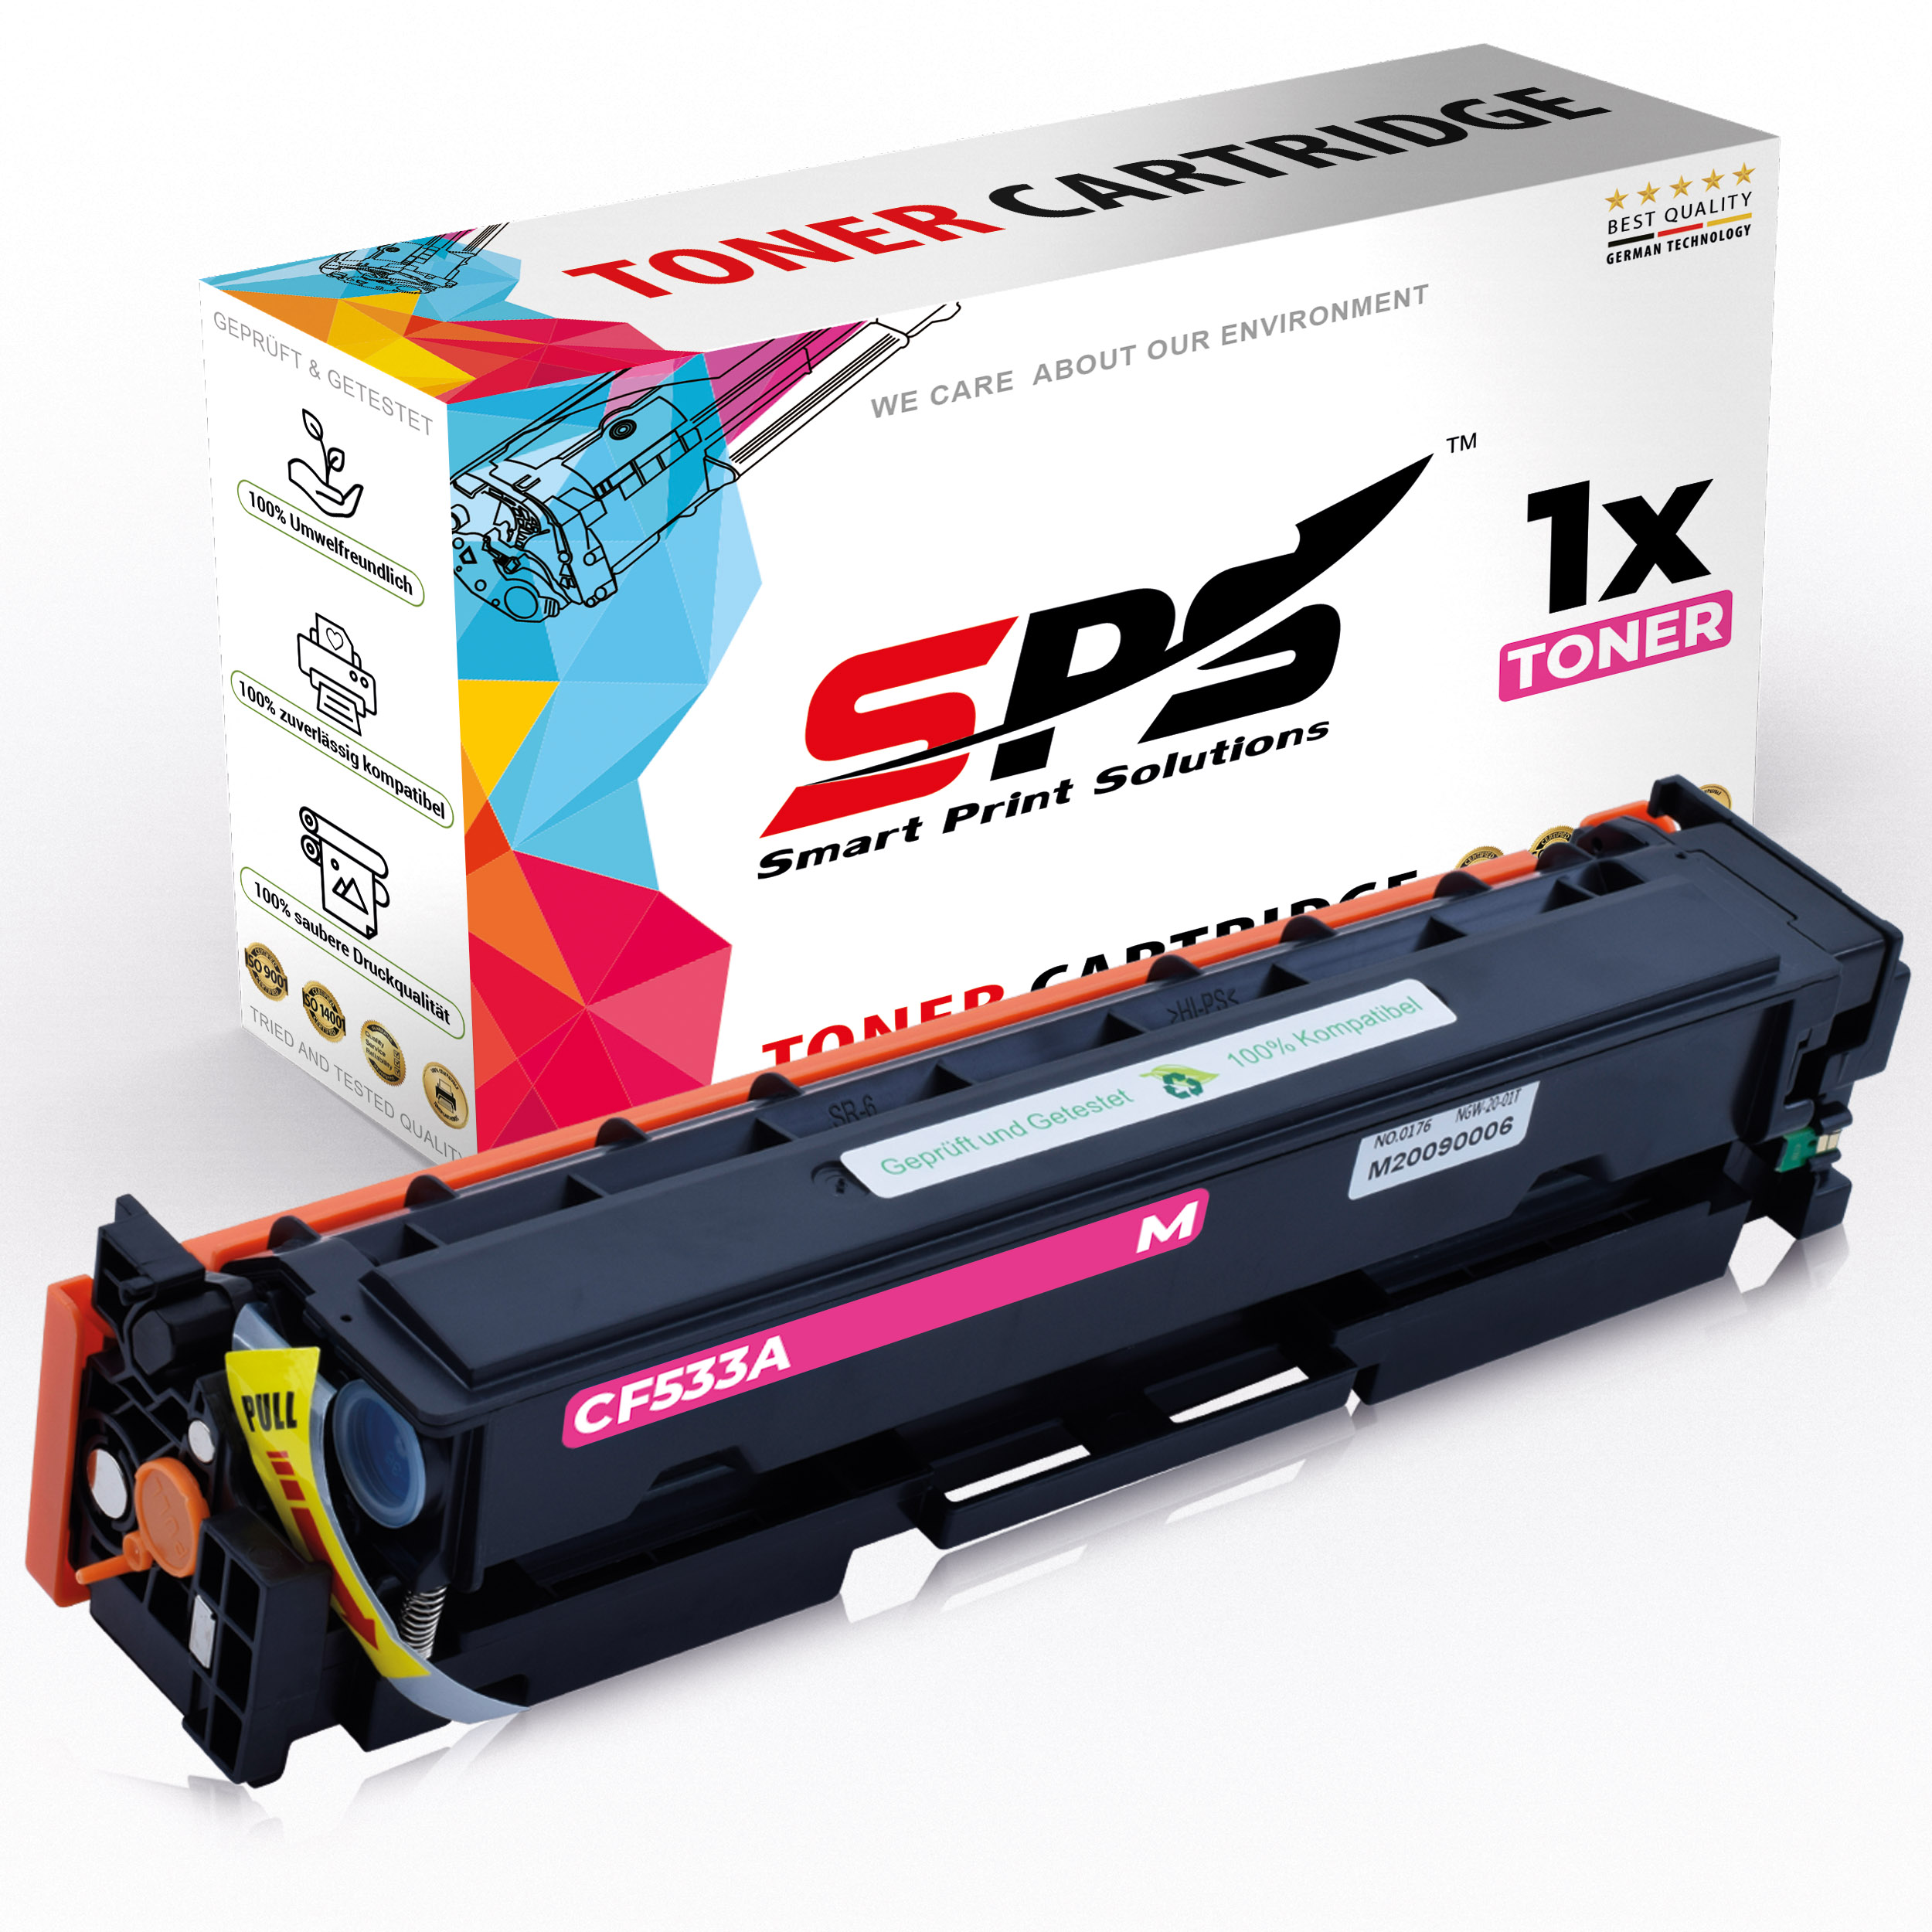 SPS S-16650 Toner Magenta (205A / CF533A Laserjet Color Pro M180) MFP